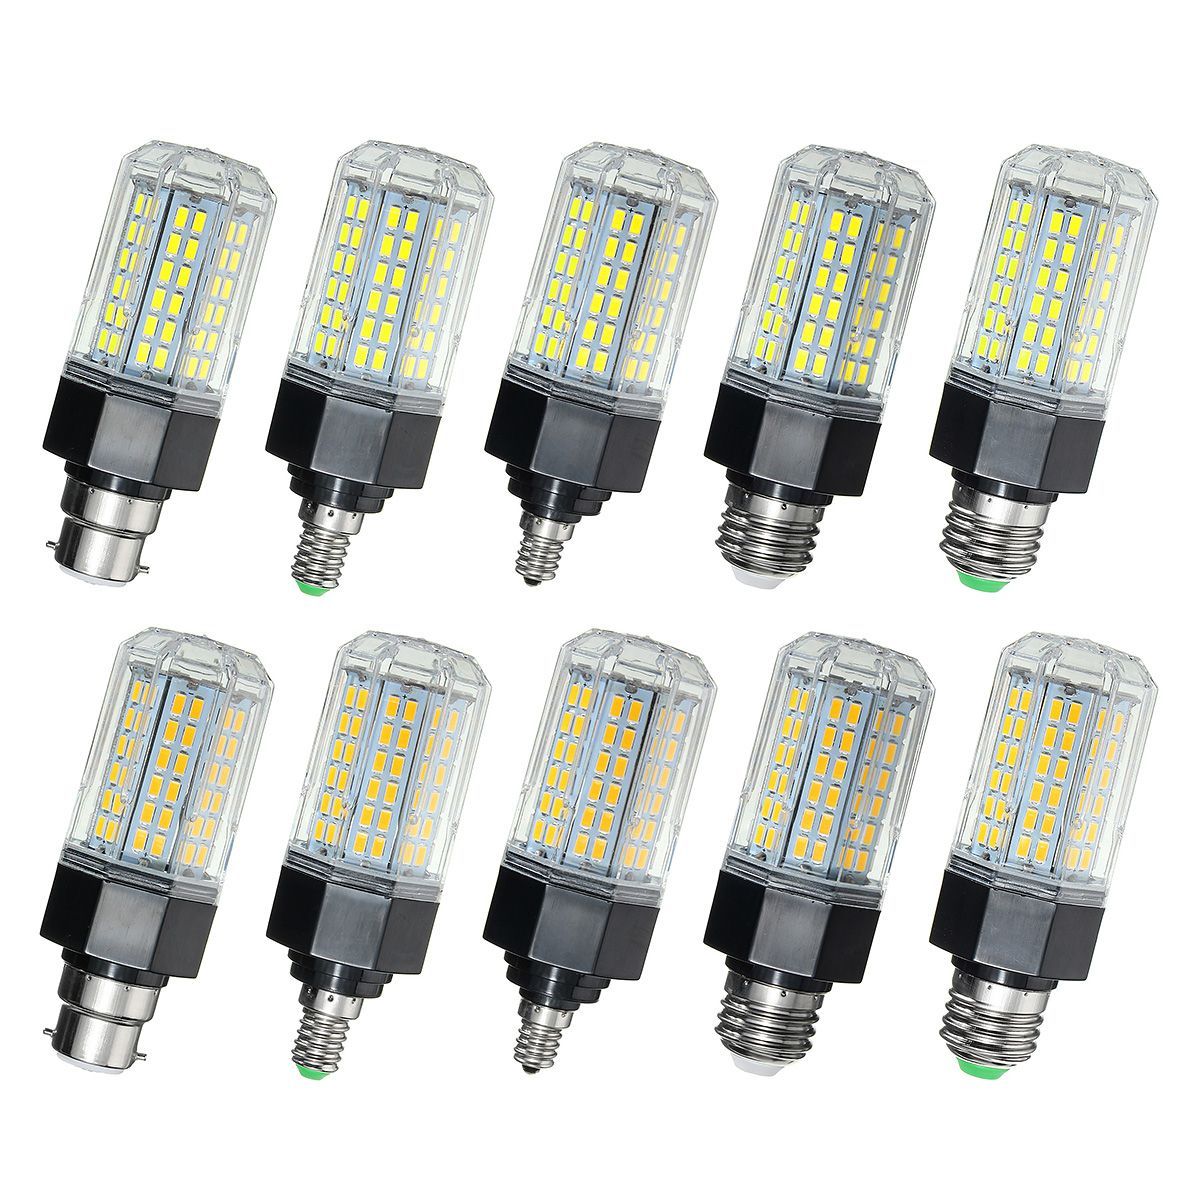 Dimmable-E27-E14-B22-E26-E12-10W-SMD5730-LED-Corn-Light-Lamp-Bulb-AC110-265V-1141537